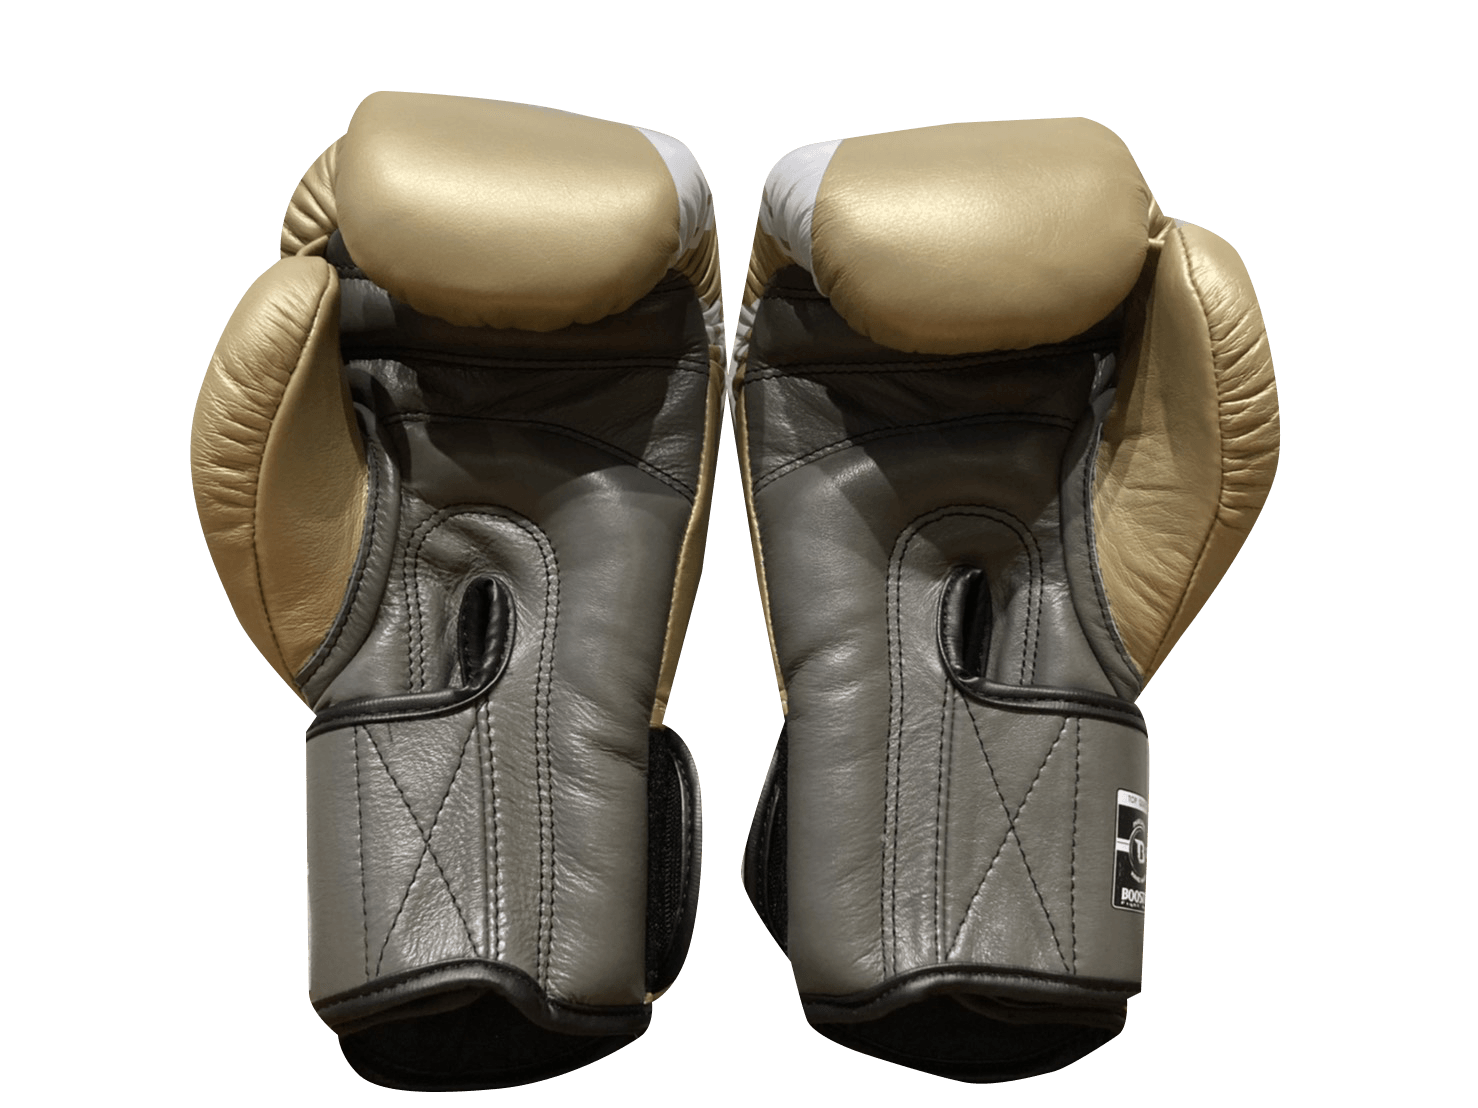 Booster Boxing Gloves BGLV3 Gold White Grey - SUPER EXPORT SHOP